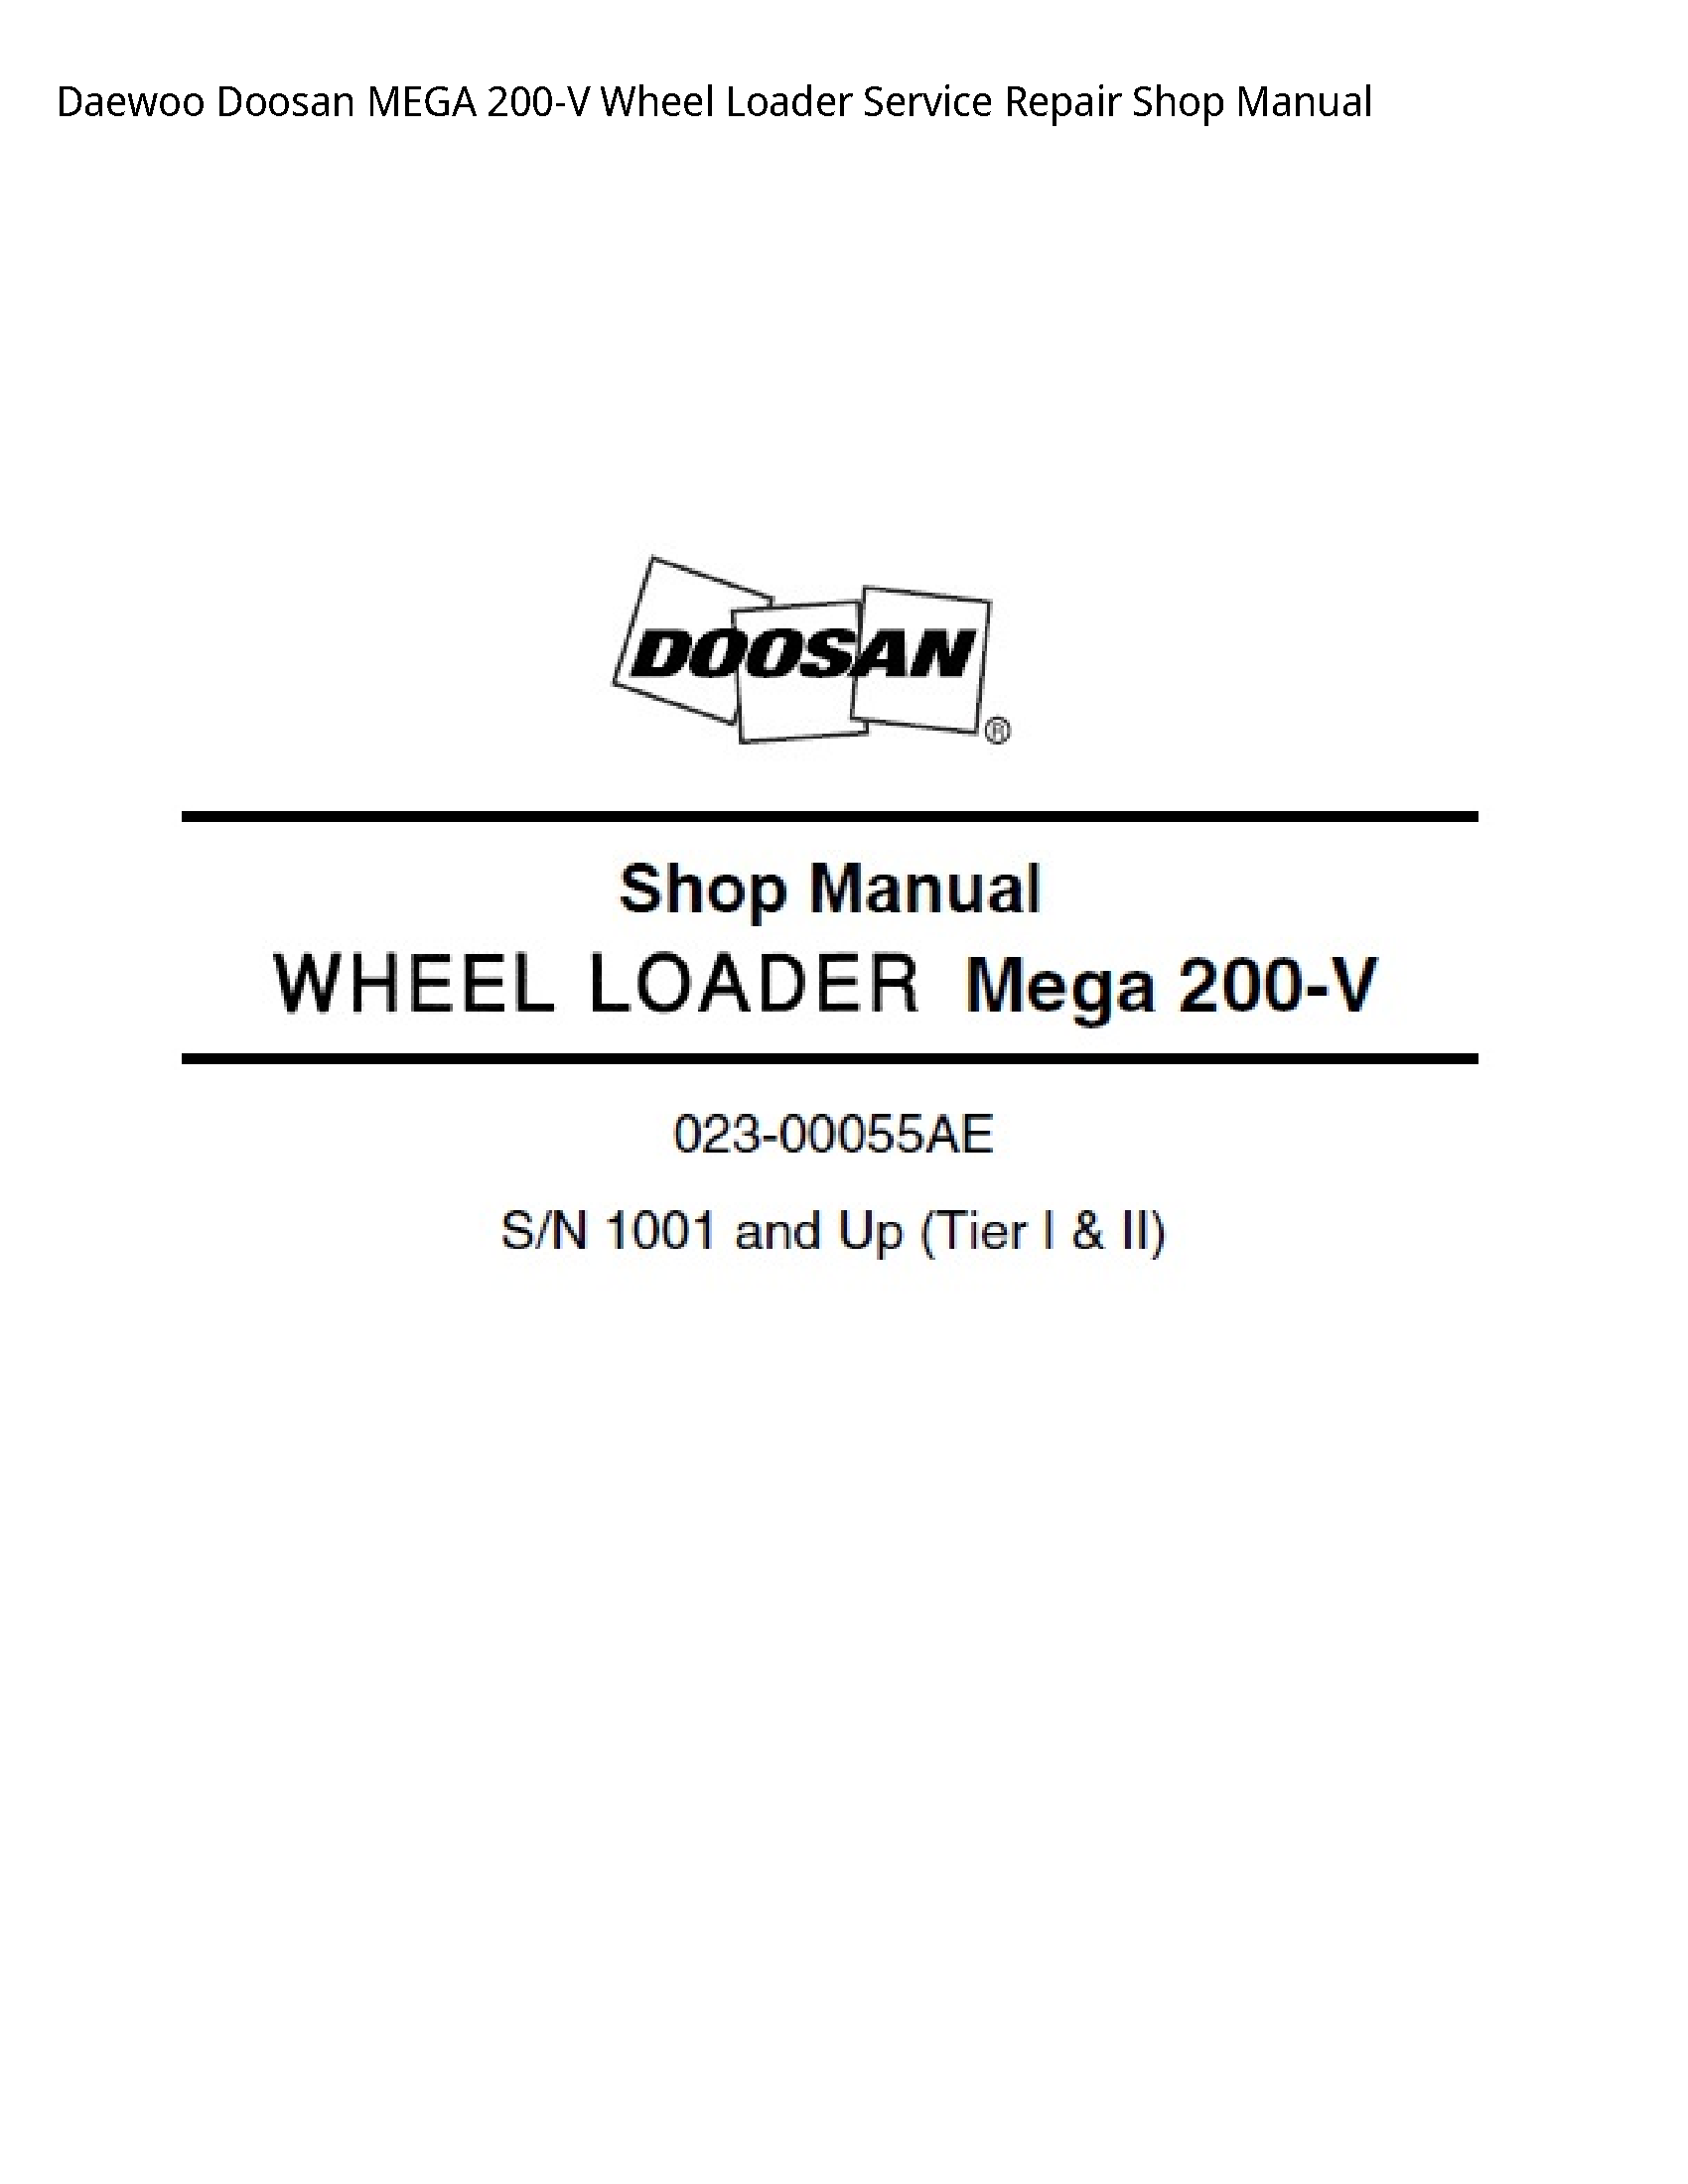 Daewoo Doosan 200-V MEGA Wheel Loader manual